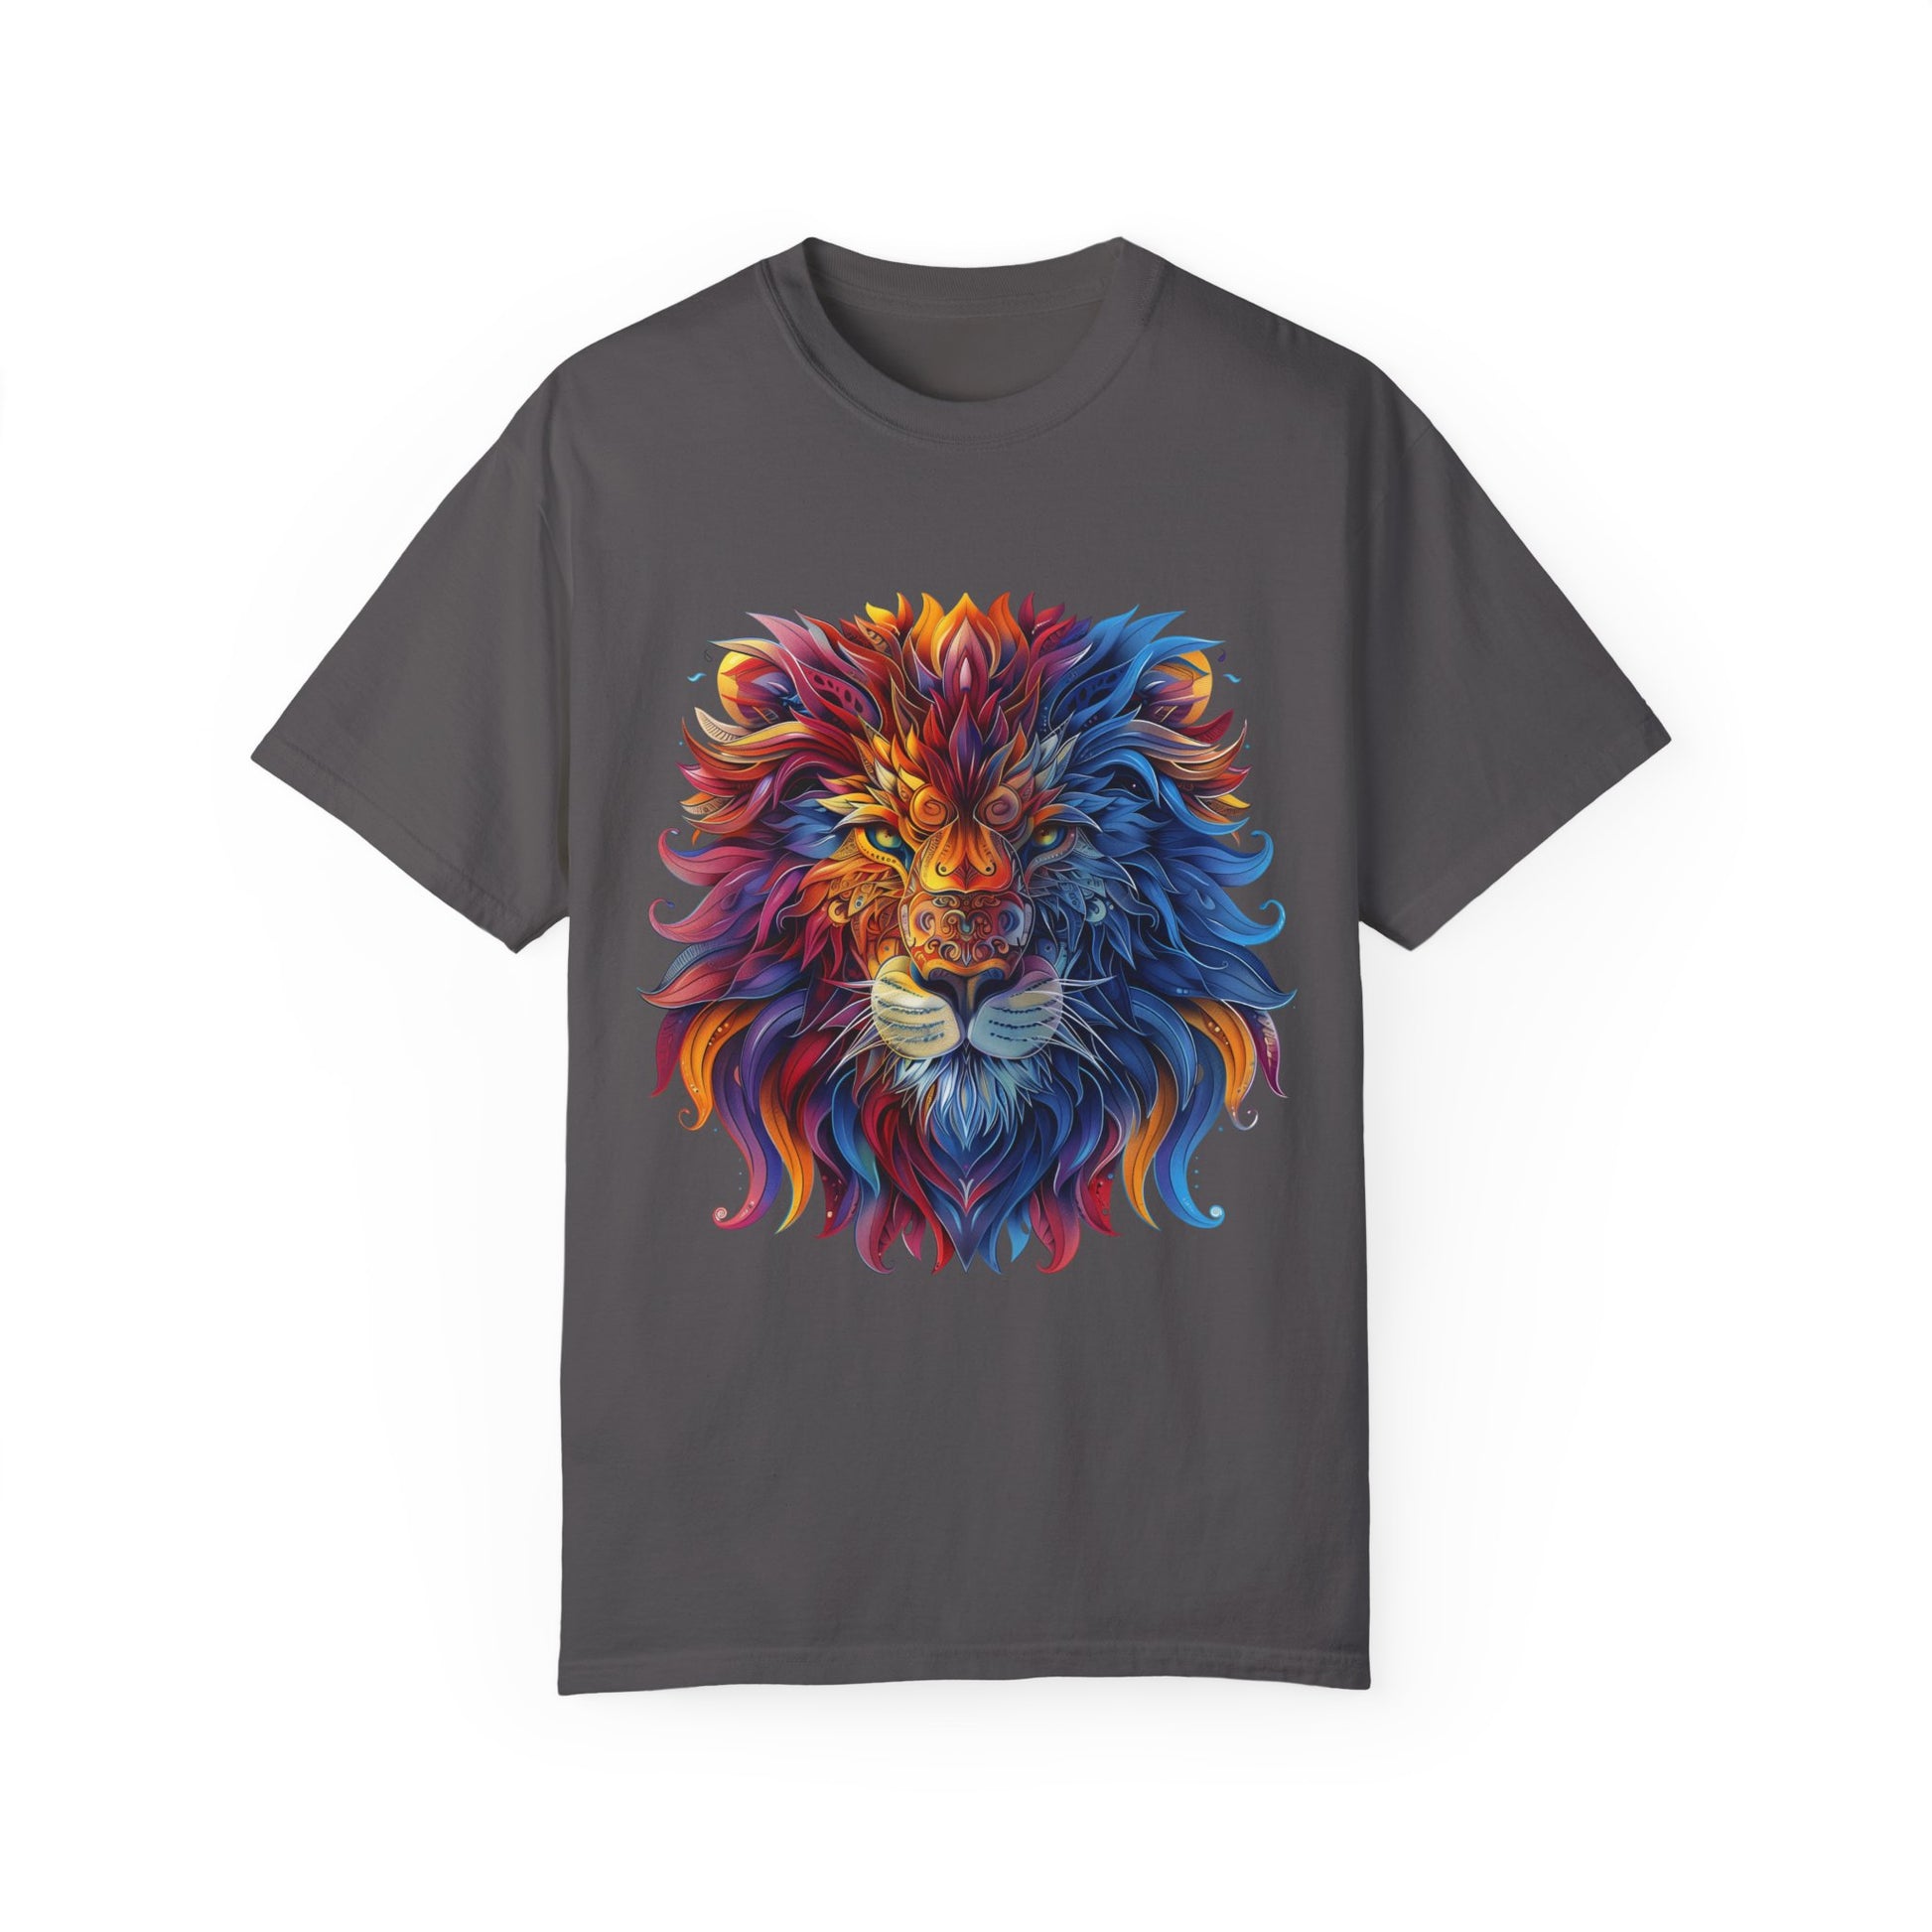 Lion Head Cool Graphic Design Novelty Unisex Garment-dyed T-shirt Cotton Funny Humorous Graphic Soft Premium Unisex Men Women Graphite T-shirt Birthday Gift-8